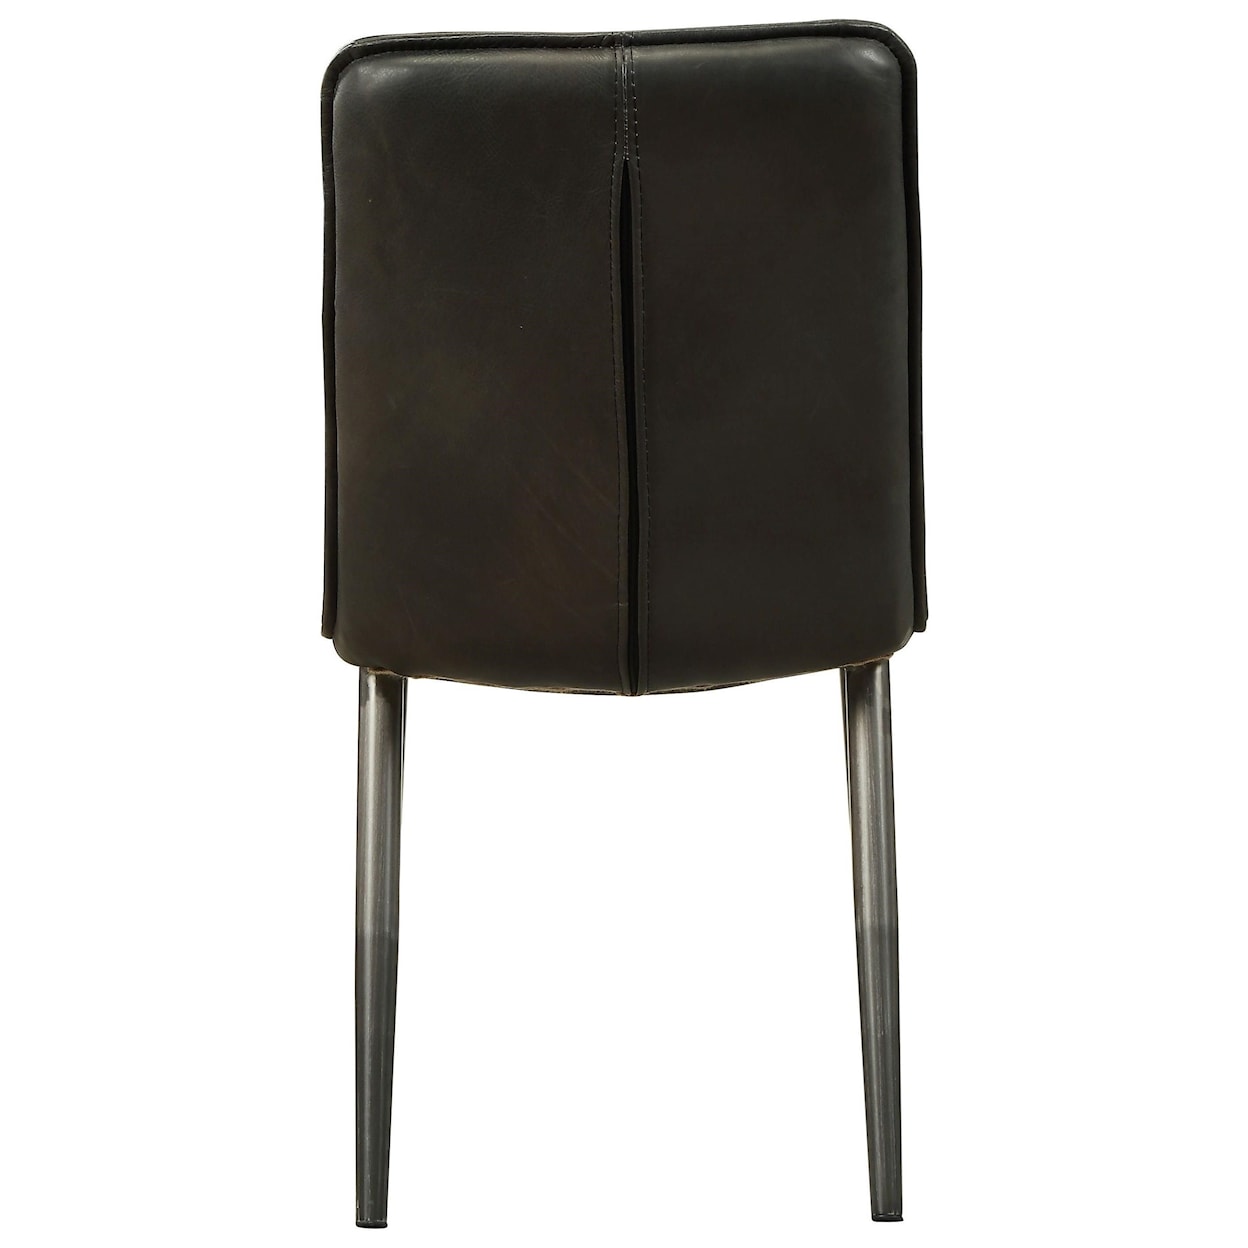 Acme Furniture Hosmer Side Chair